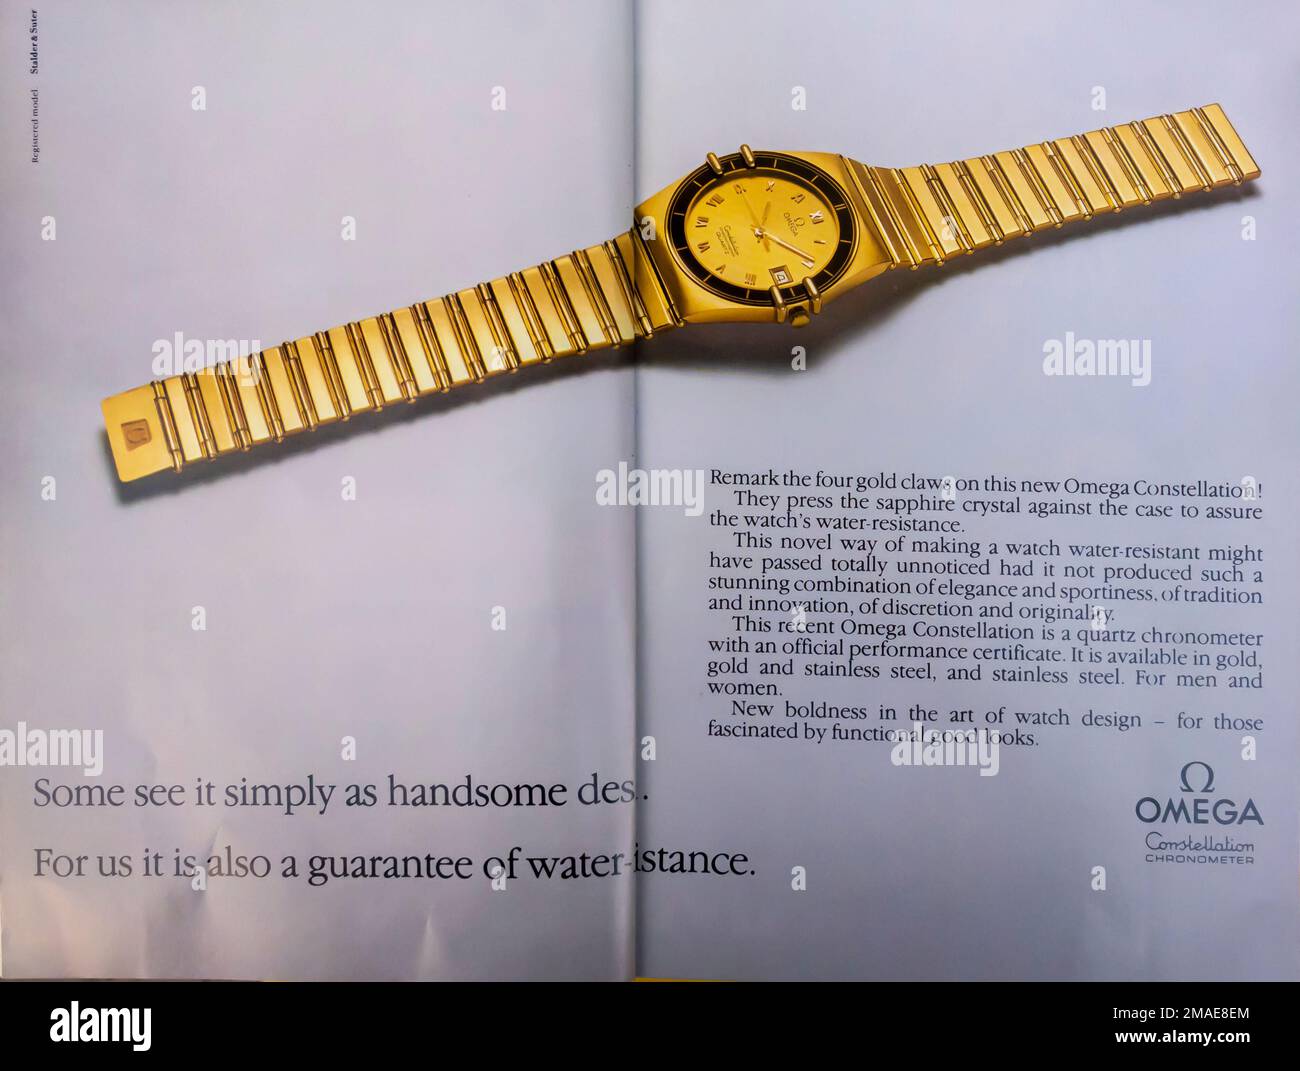 Chronometer cut out -Fotos und -Bildmaterial in hoher Auflösung – Alamy